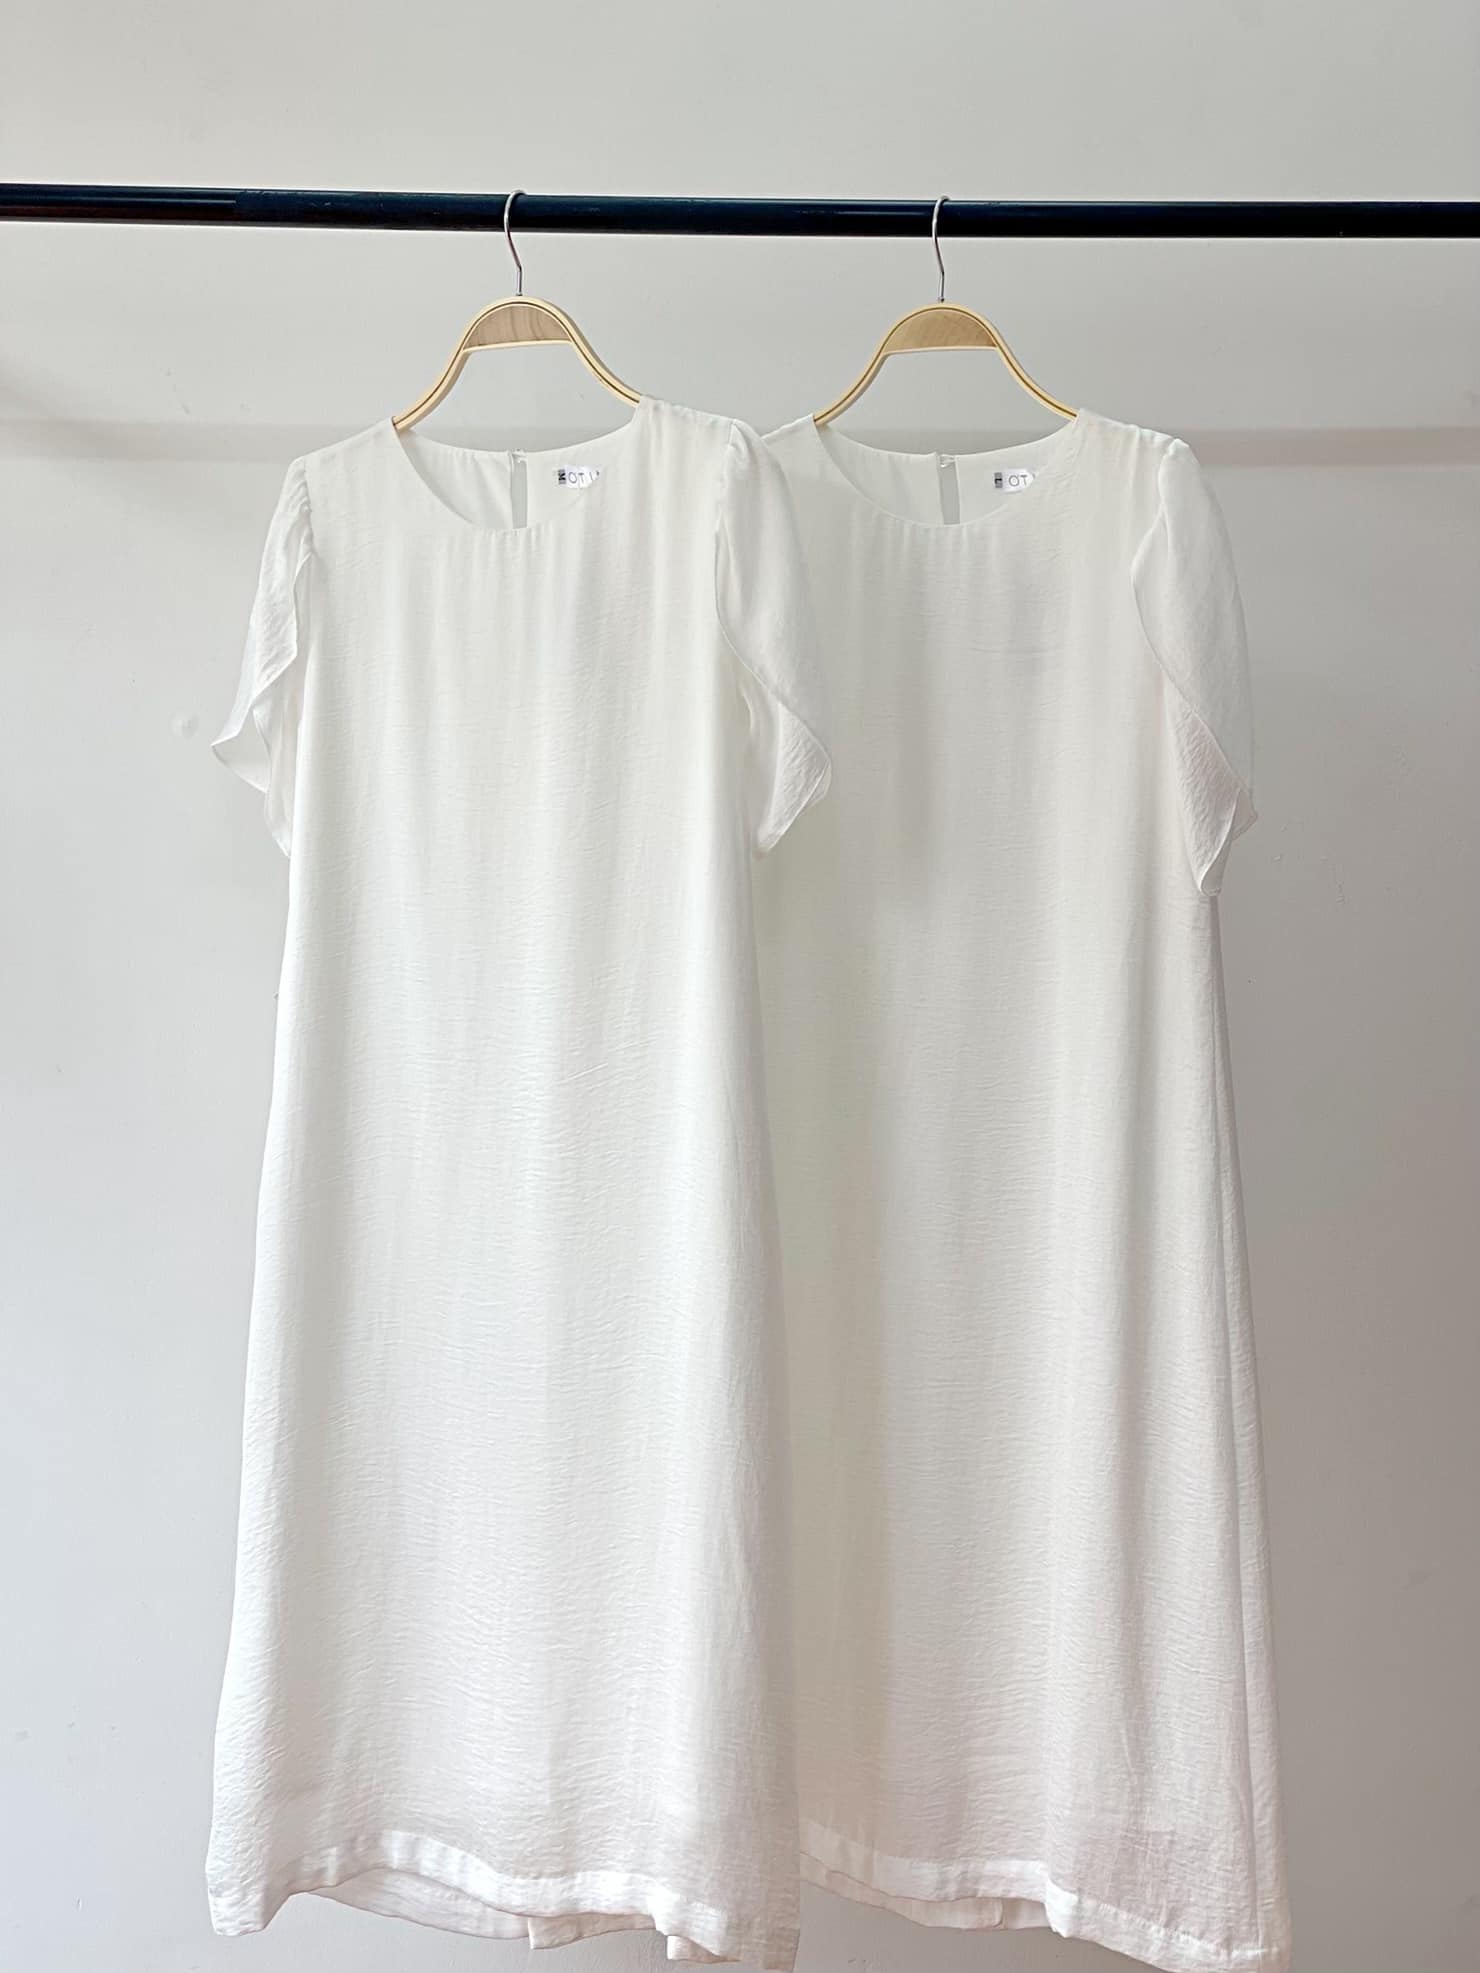 Váy maxi trắng suông hoa 3D M107